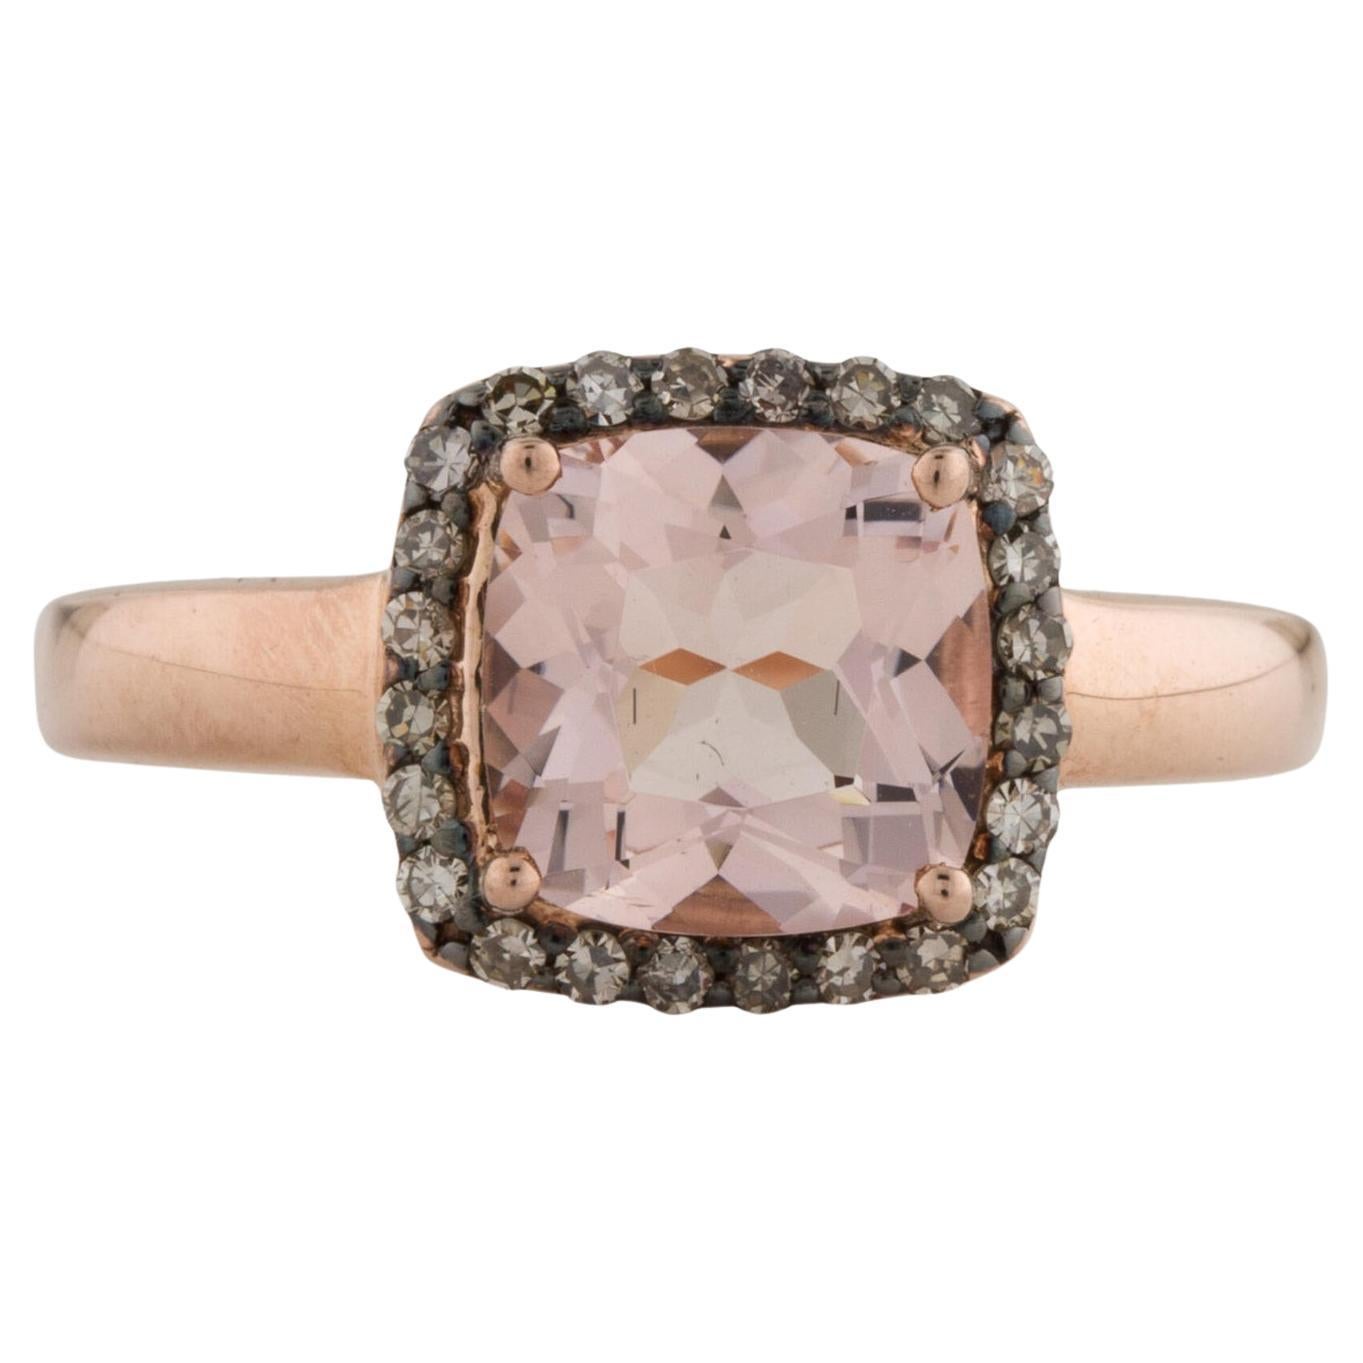 Exquisite 14K Diamond & Morganite Cocktail Ring - Size 7.5 - Elegant Jewelry For Sale